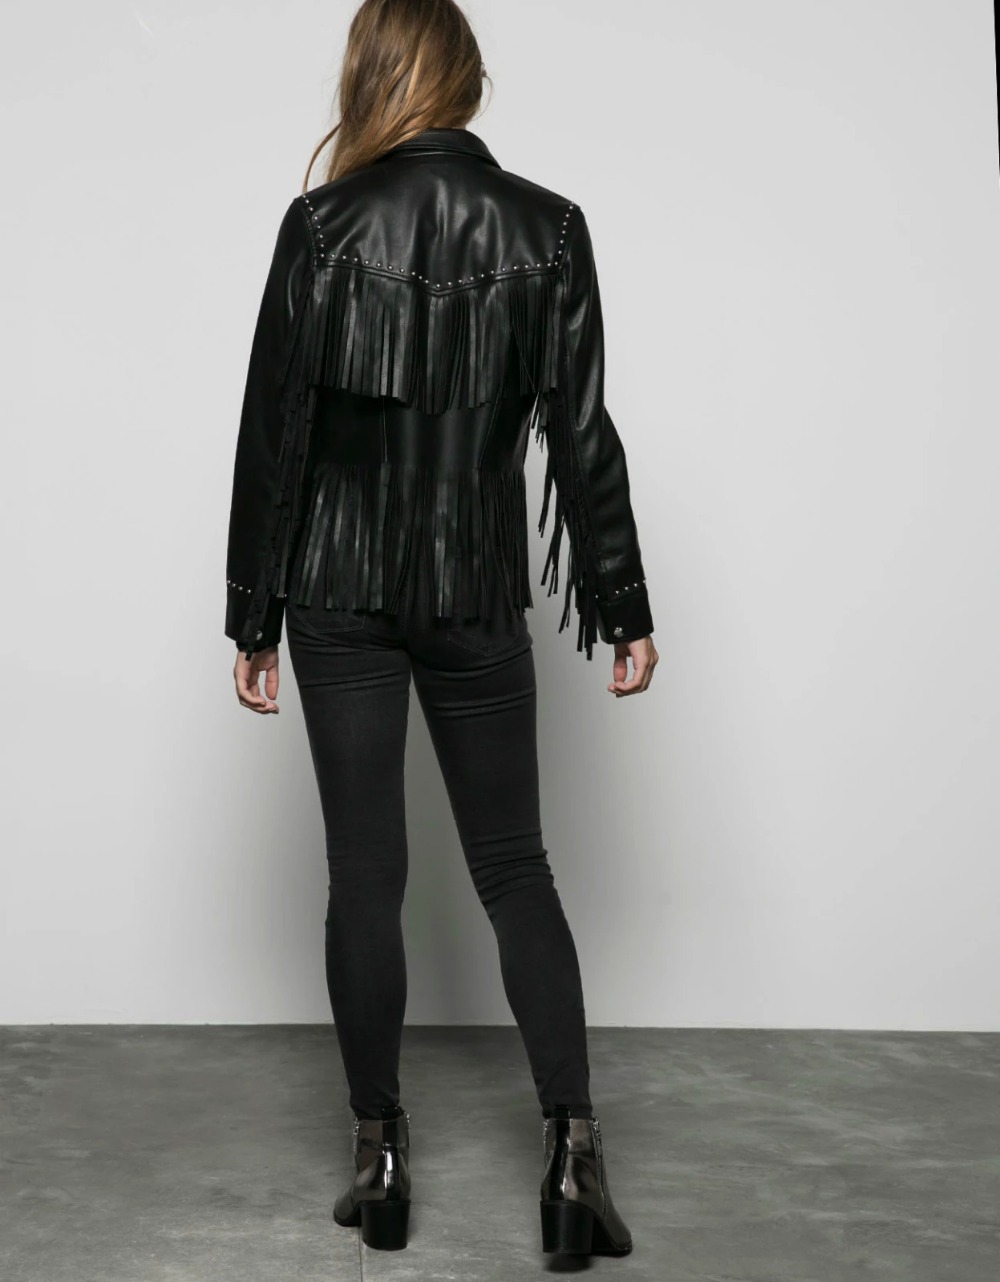 Fashion Women Rock style faux leather black Rivet Tassel Turn-down collar zipper jacket coat Casual jaqueta feminina Brand